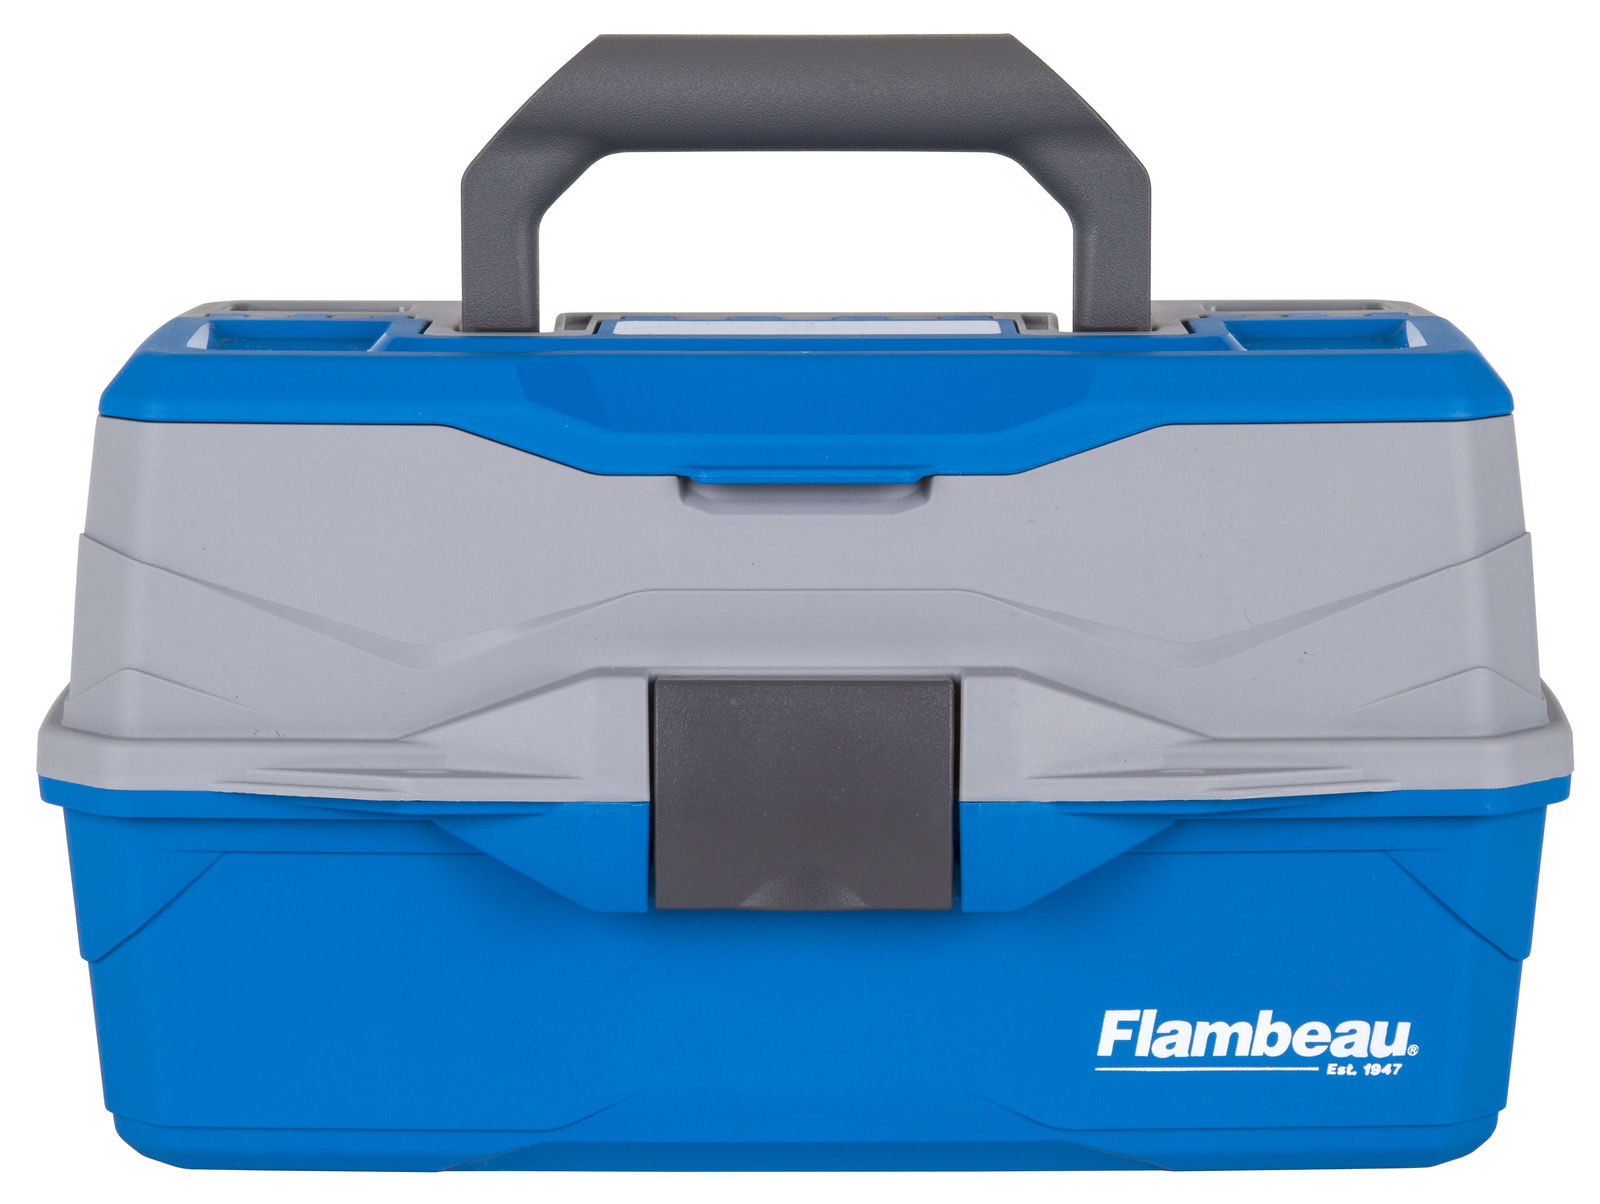 Flambeau 6382TB 2-Tray Tackle Box